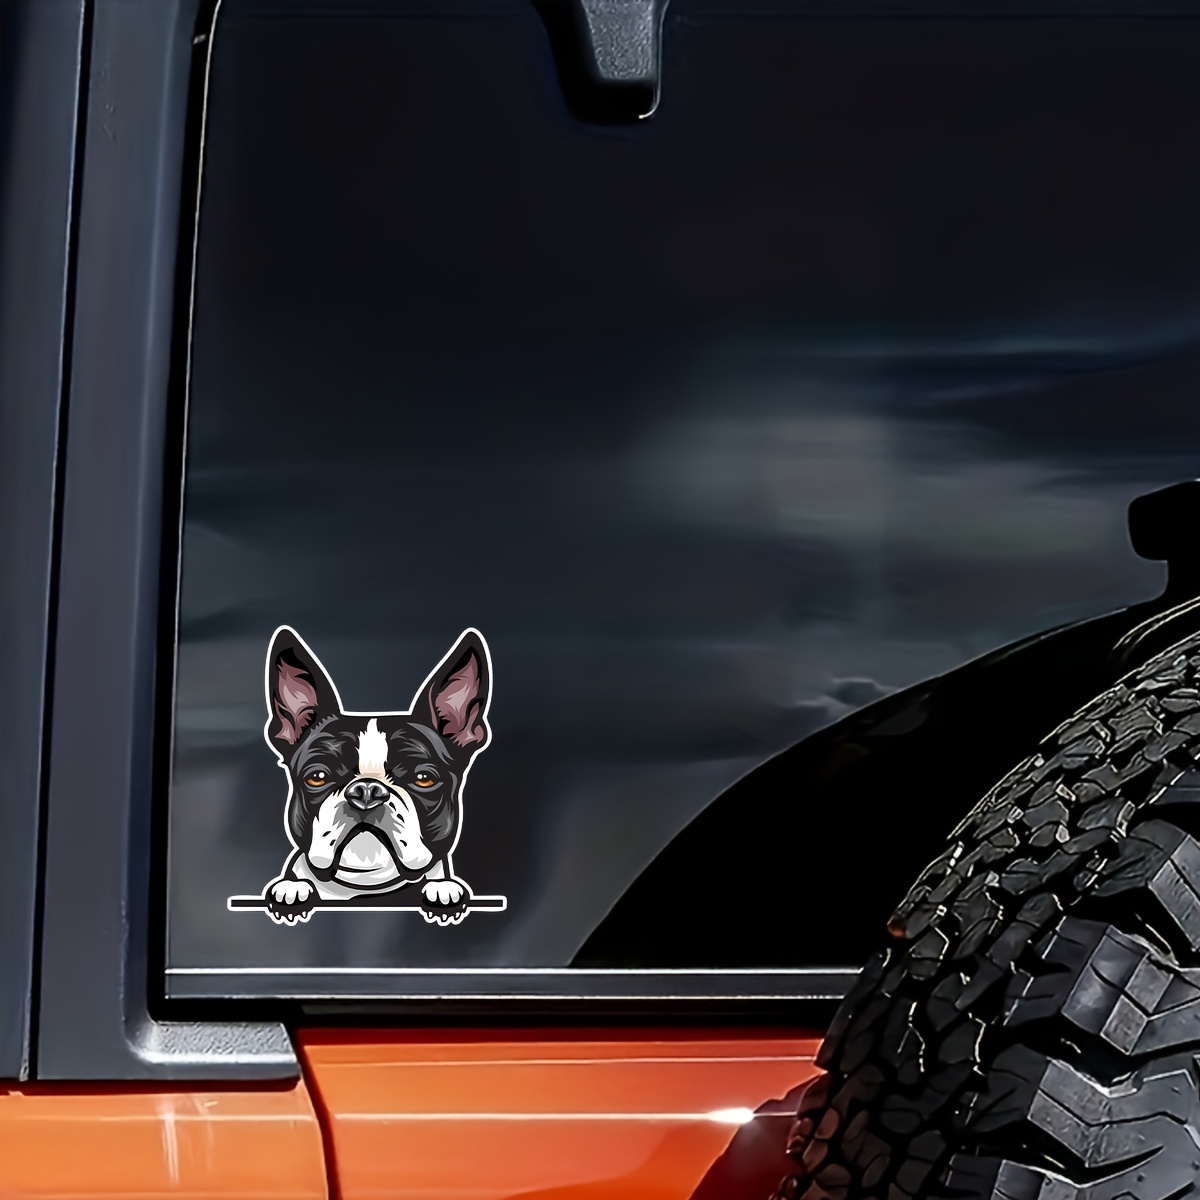 

Boston Terrier Decal - Dog Breed Bumper Sticker - For Laptops Tumblers Windows Cars Trucks Walls